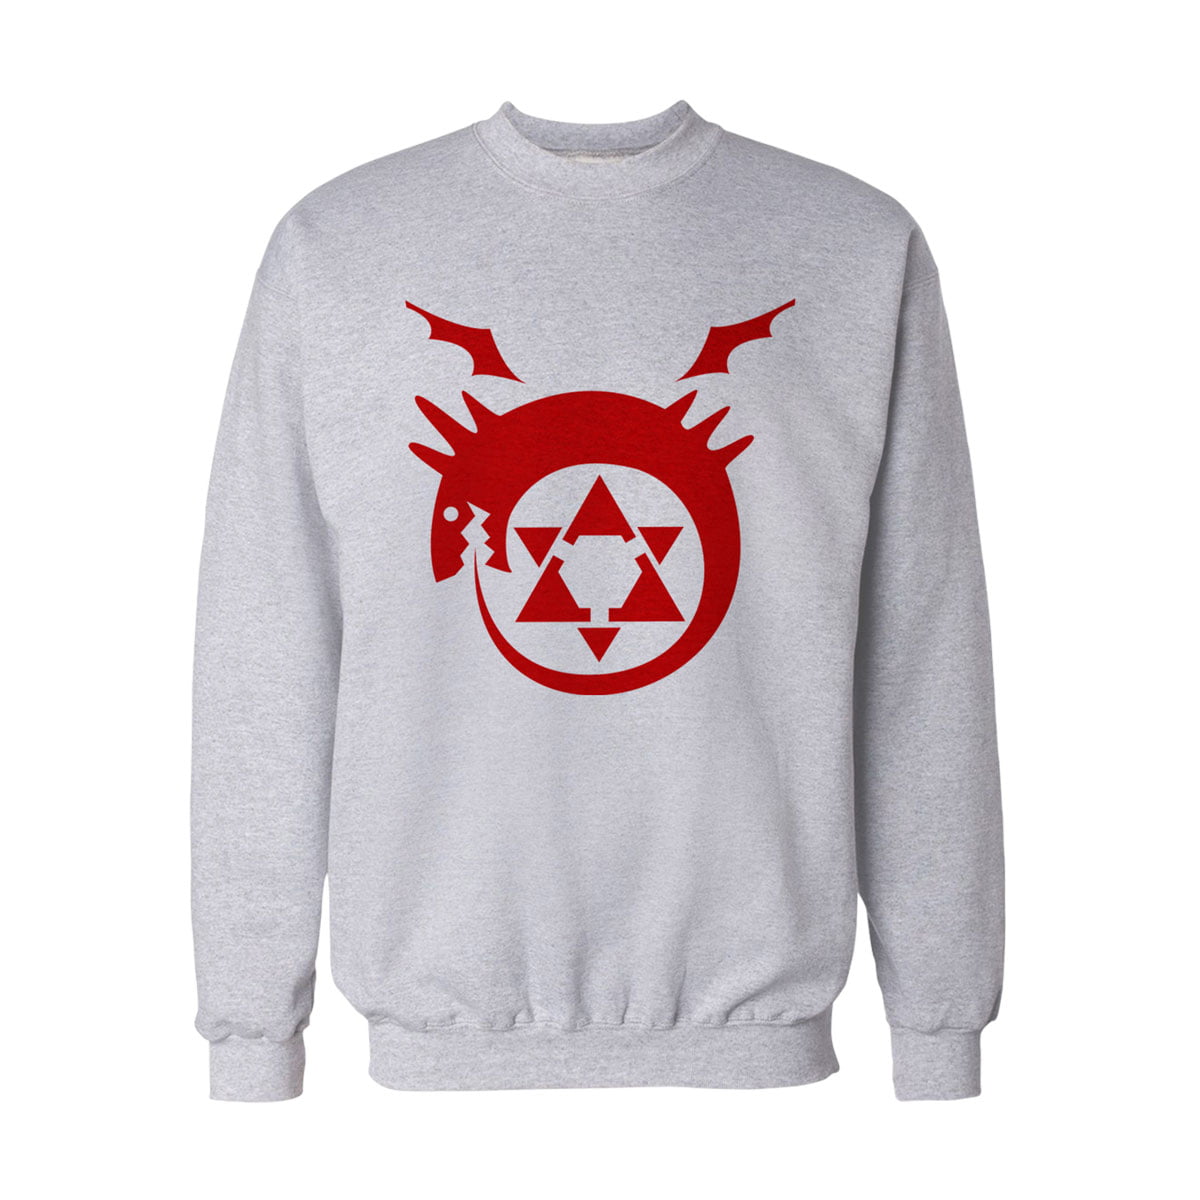 Fma logo sweatshirt b - fullmetal alchemist unisex sweatshirt - figurex